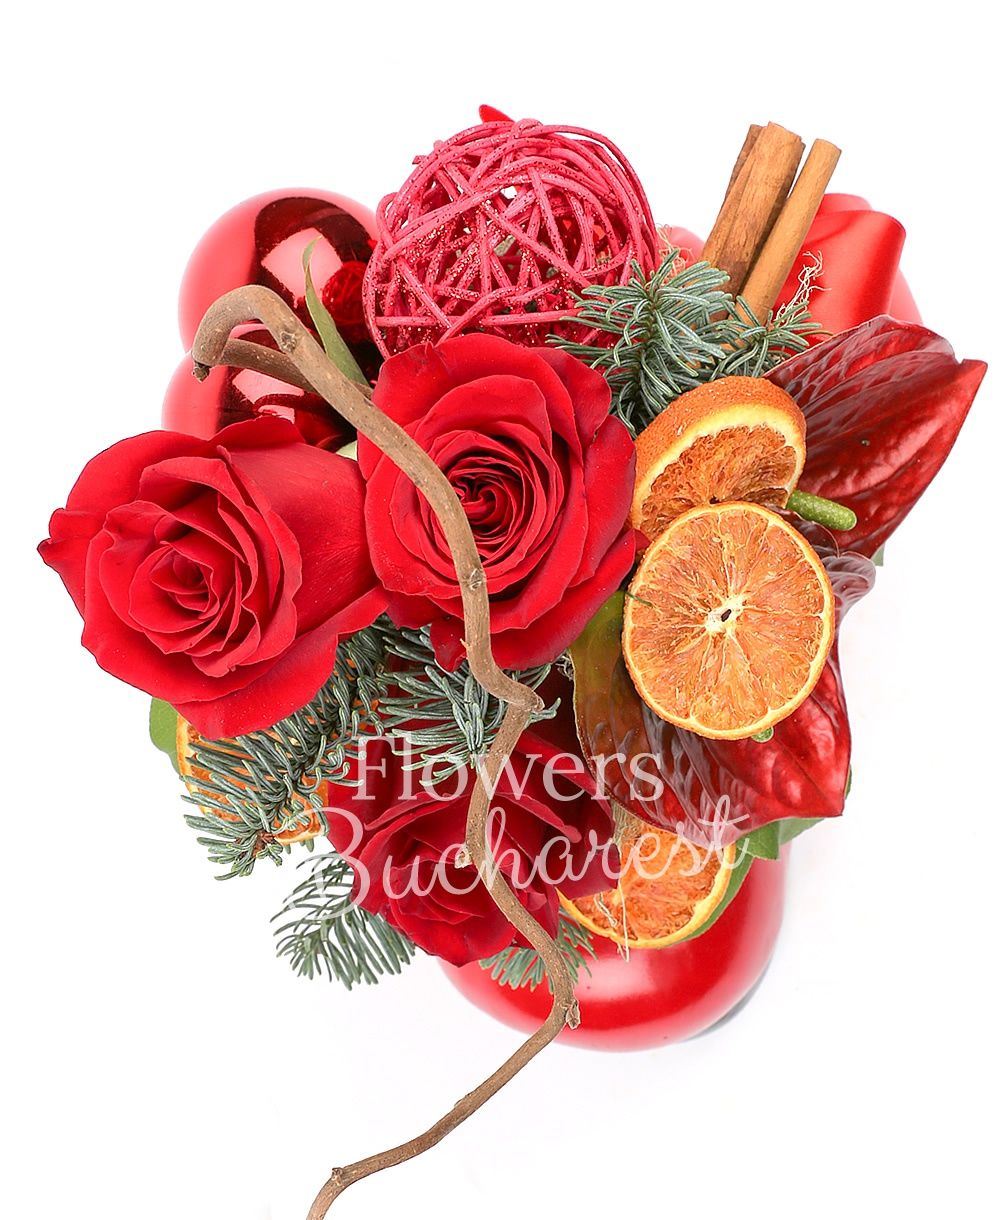 3 red roses, 2 red anthurium, corylus, orange slices, cinnamon, globes, fir, greenery